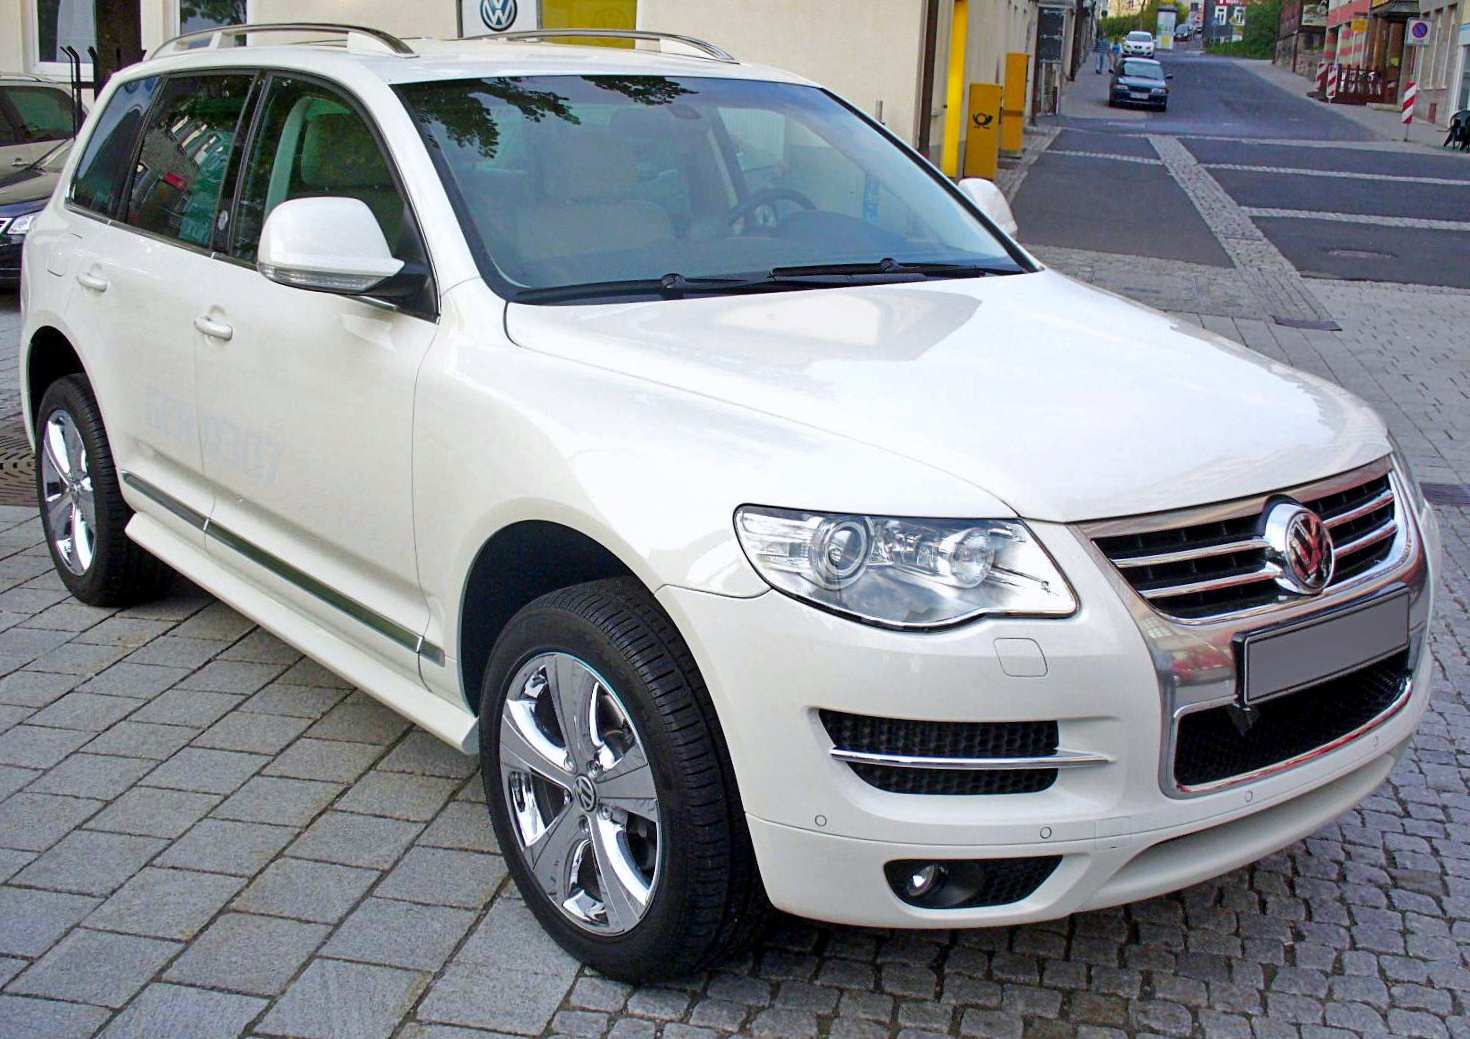 File:VW Touareg front 20071125.jpg - Wikimedia Commons